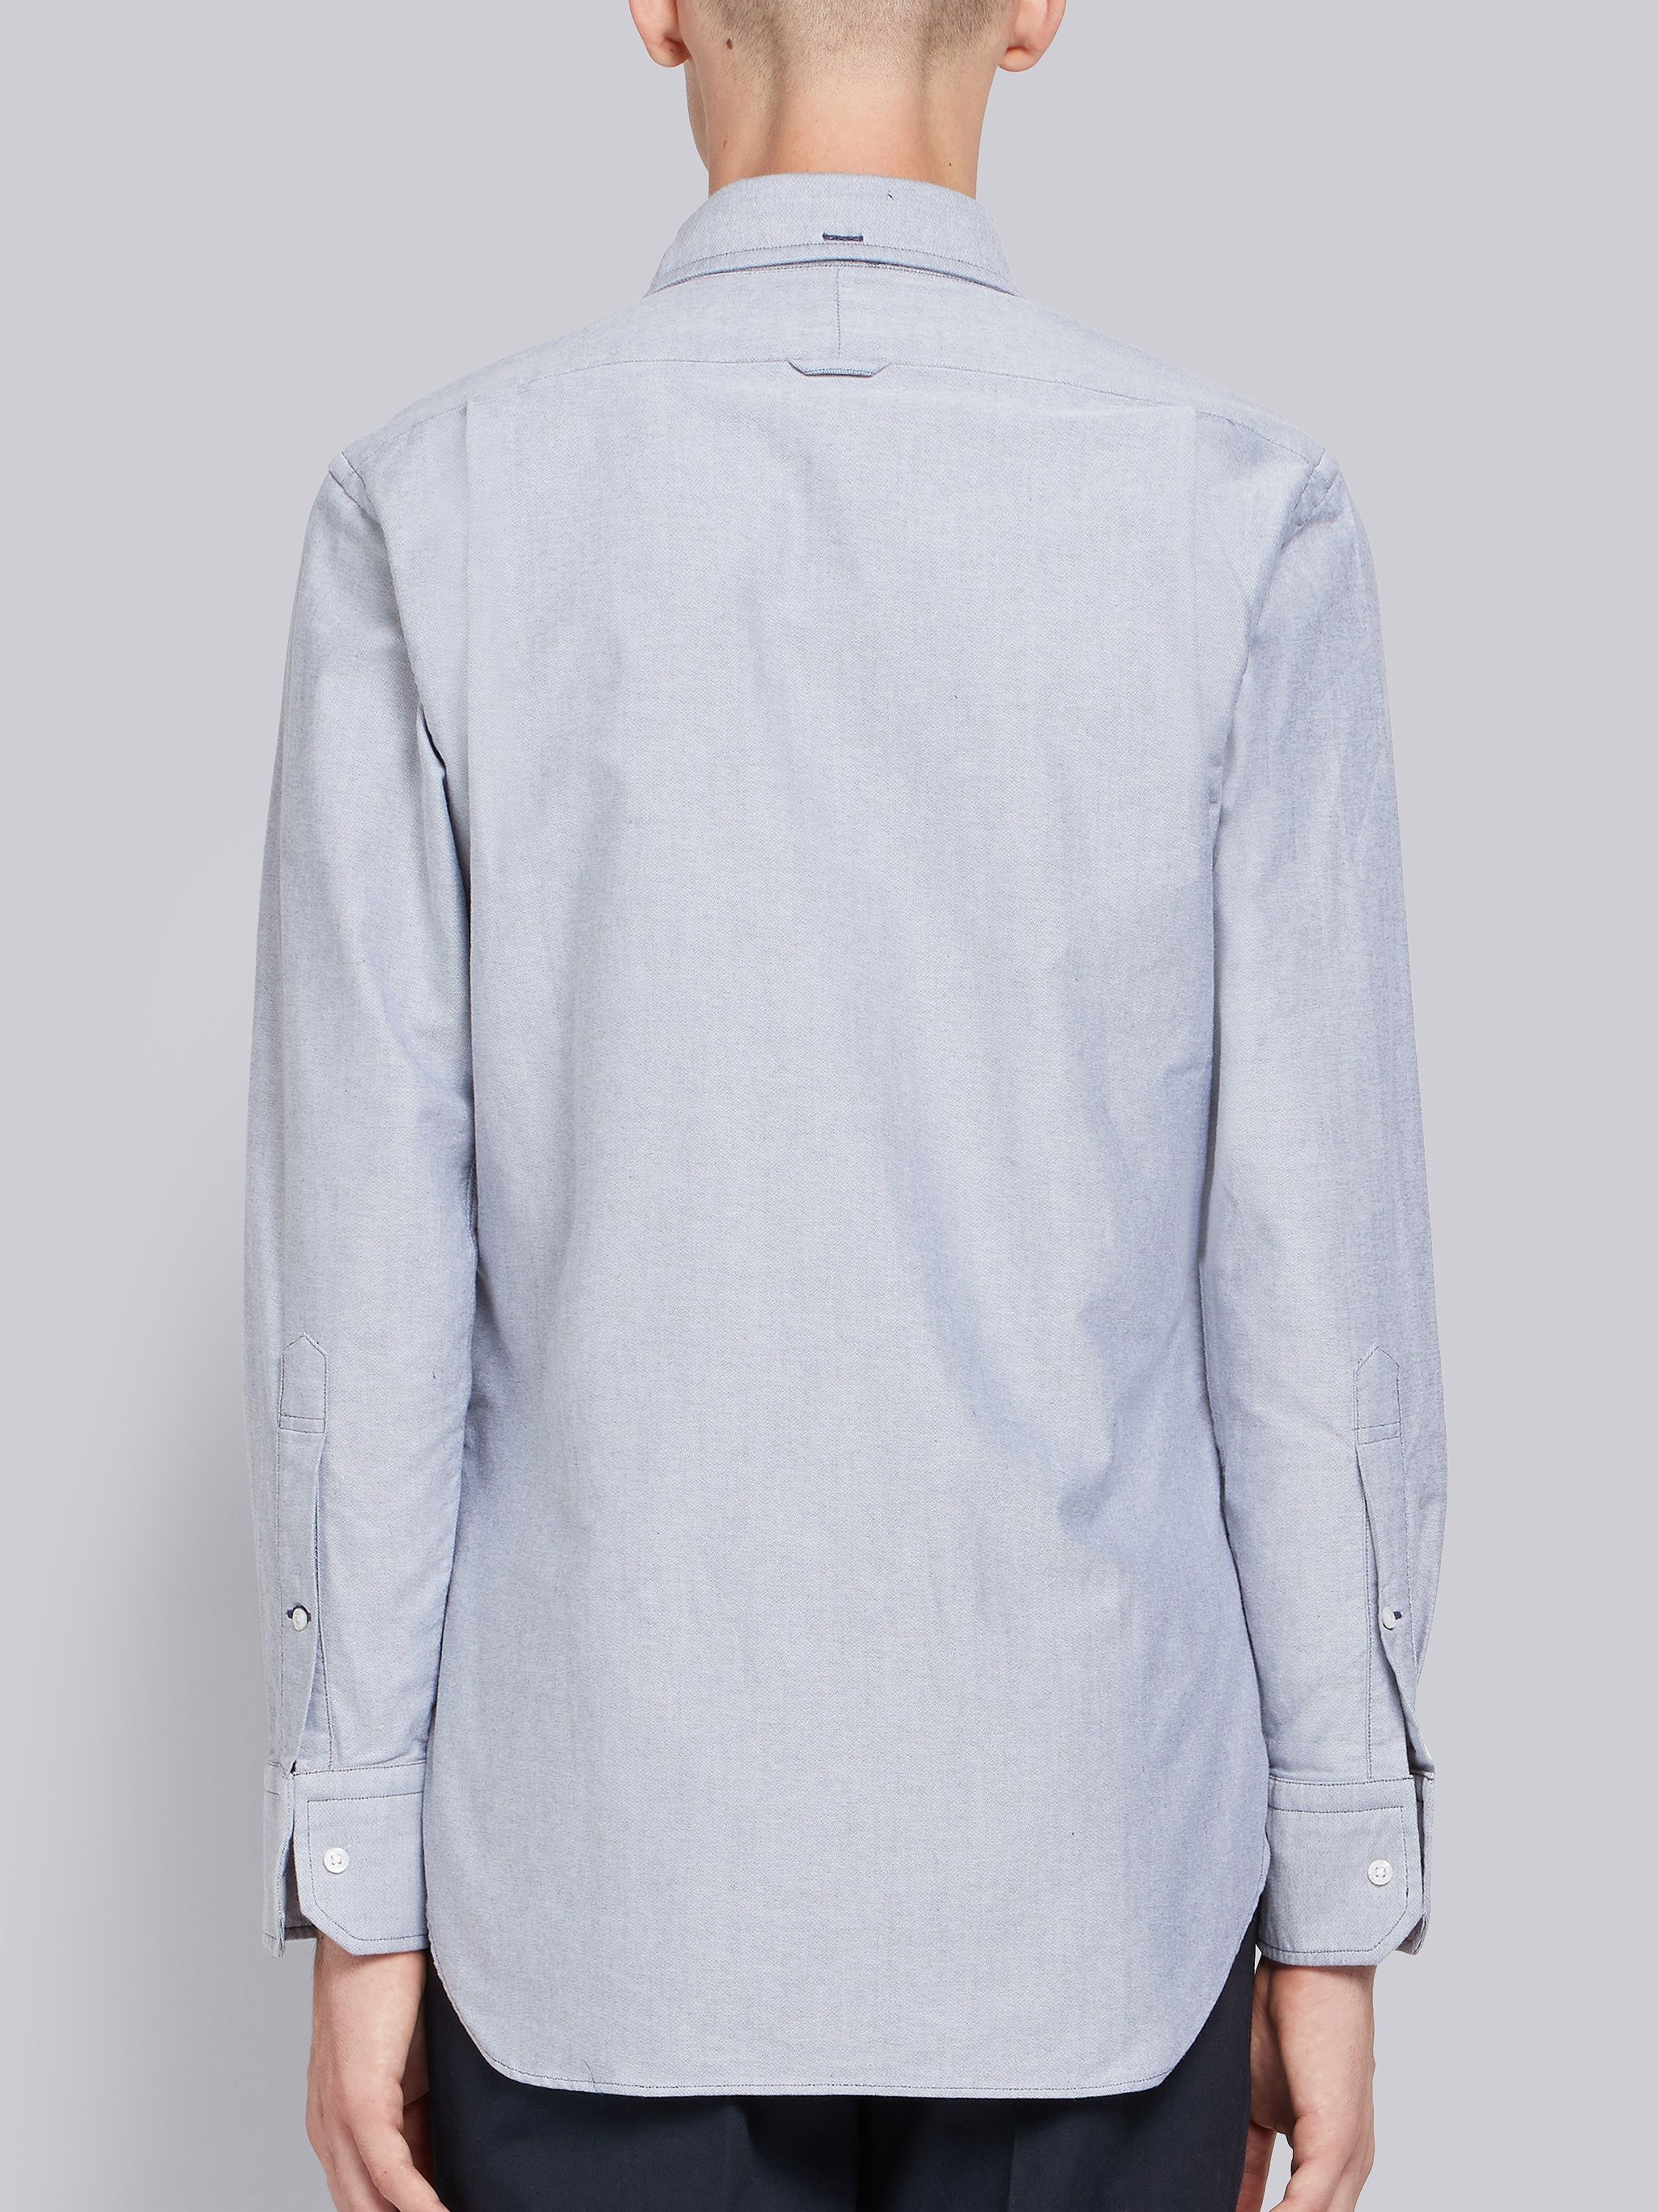 Grosgrain Placket Oxford Shirt - 4